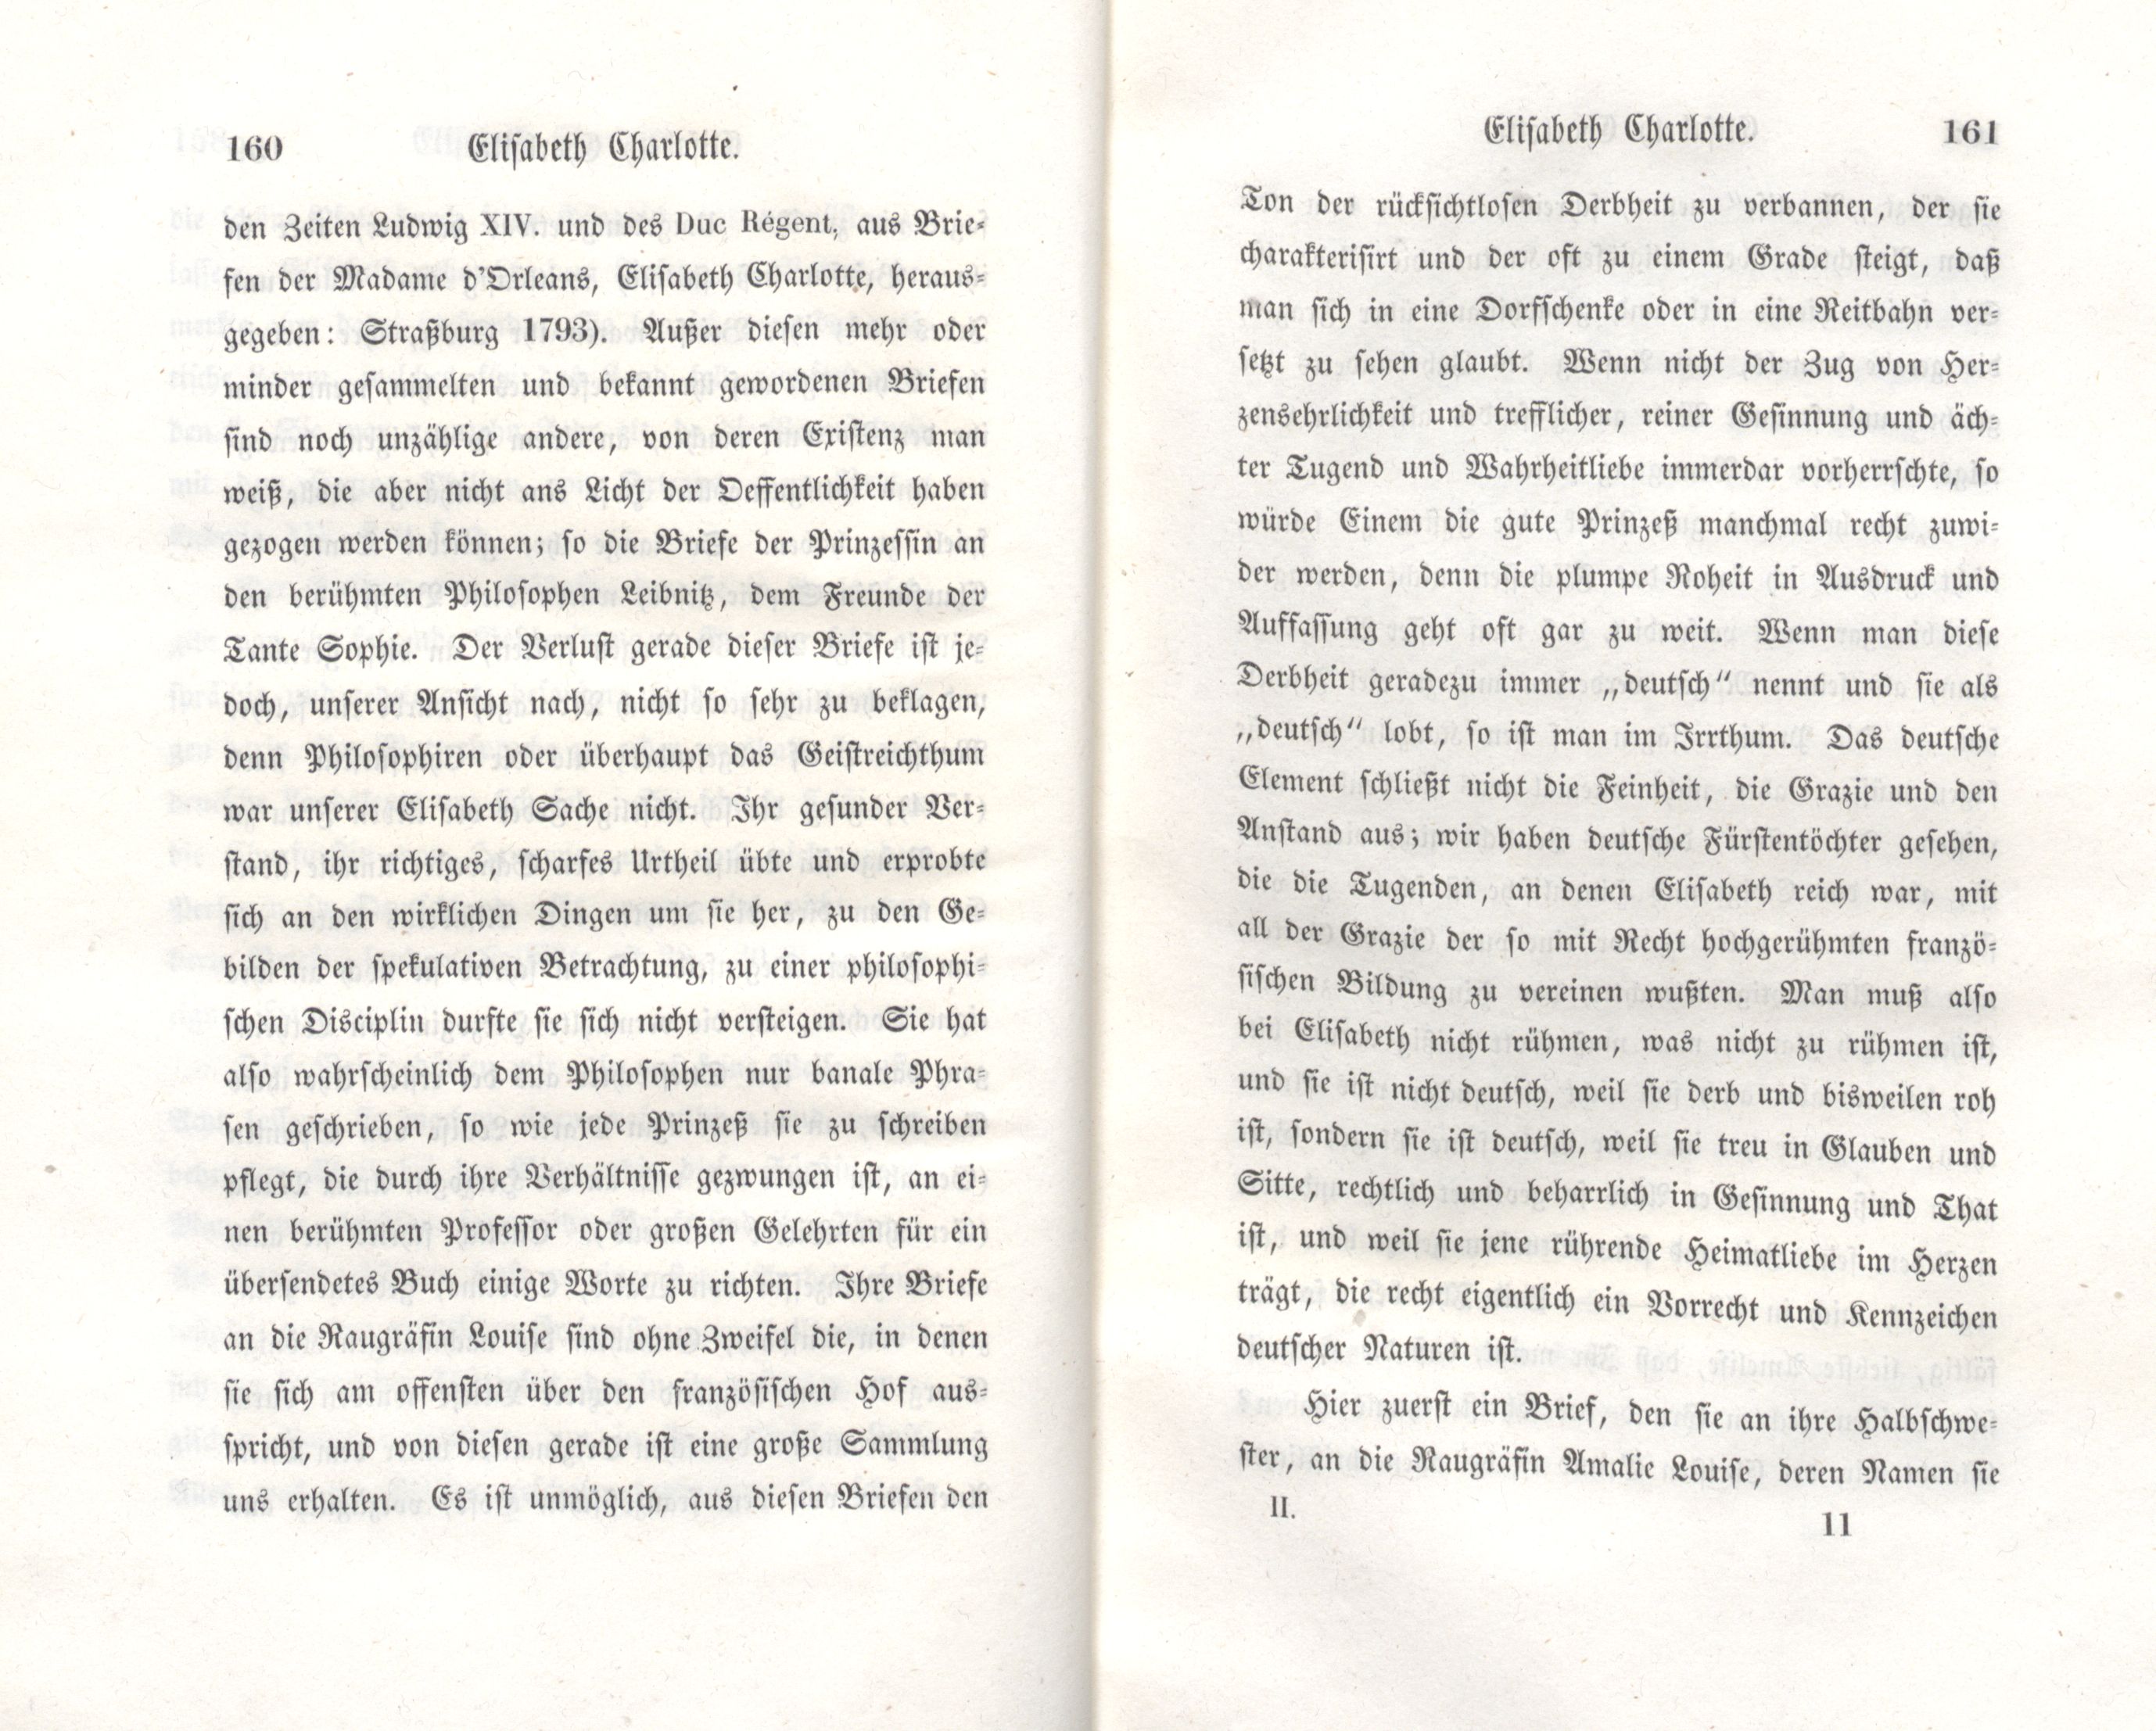 Berühmte deutsche Frauen des achtzehnten Jahrhunderts [2] (1848) | 86. (160-161) Main body of text